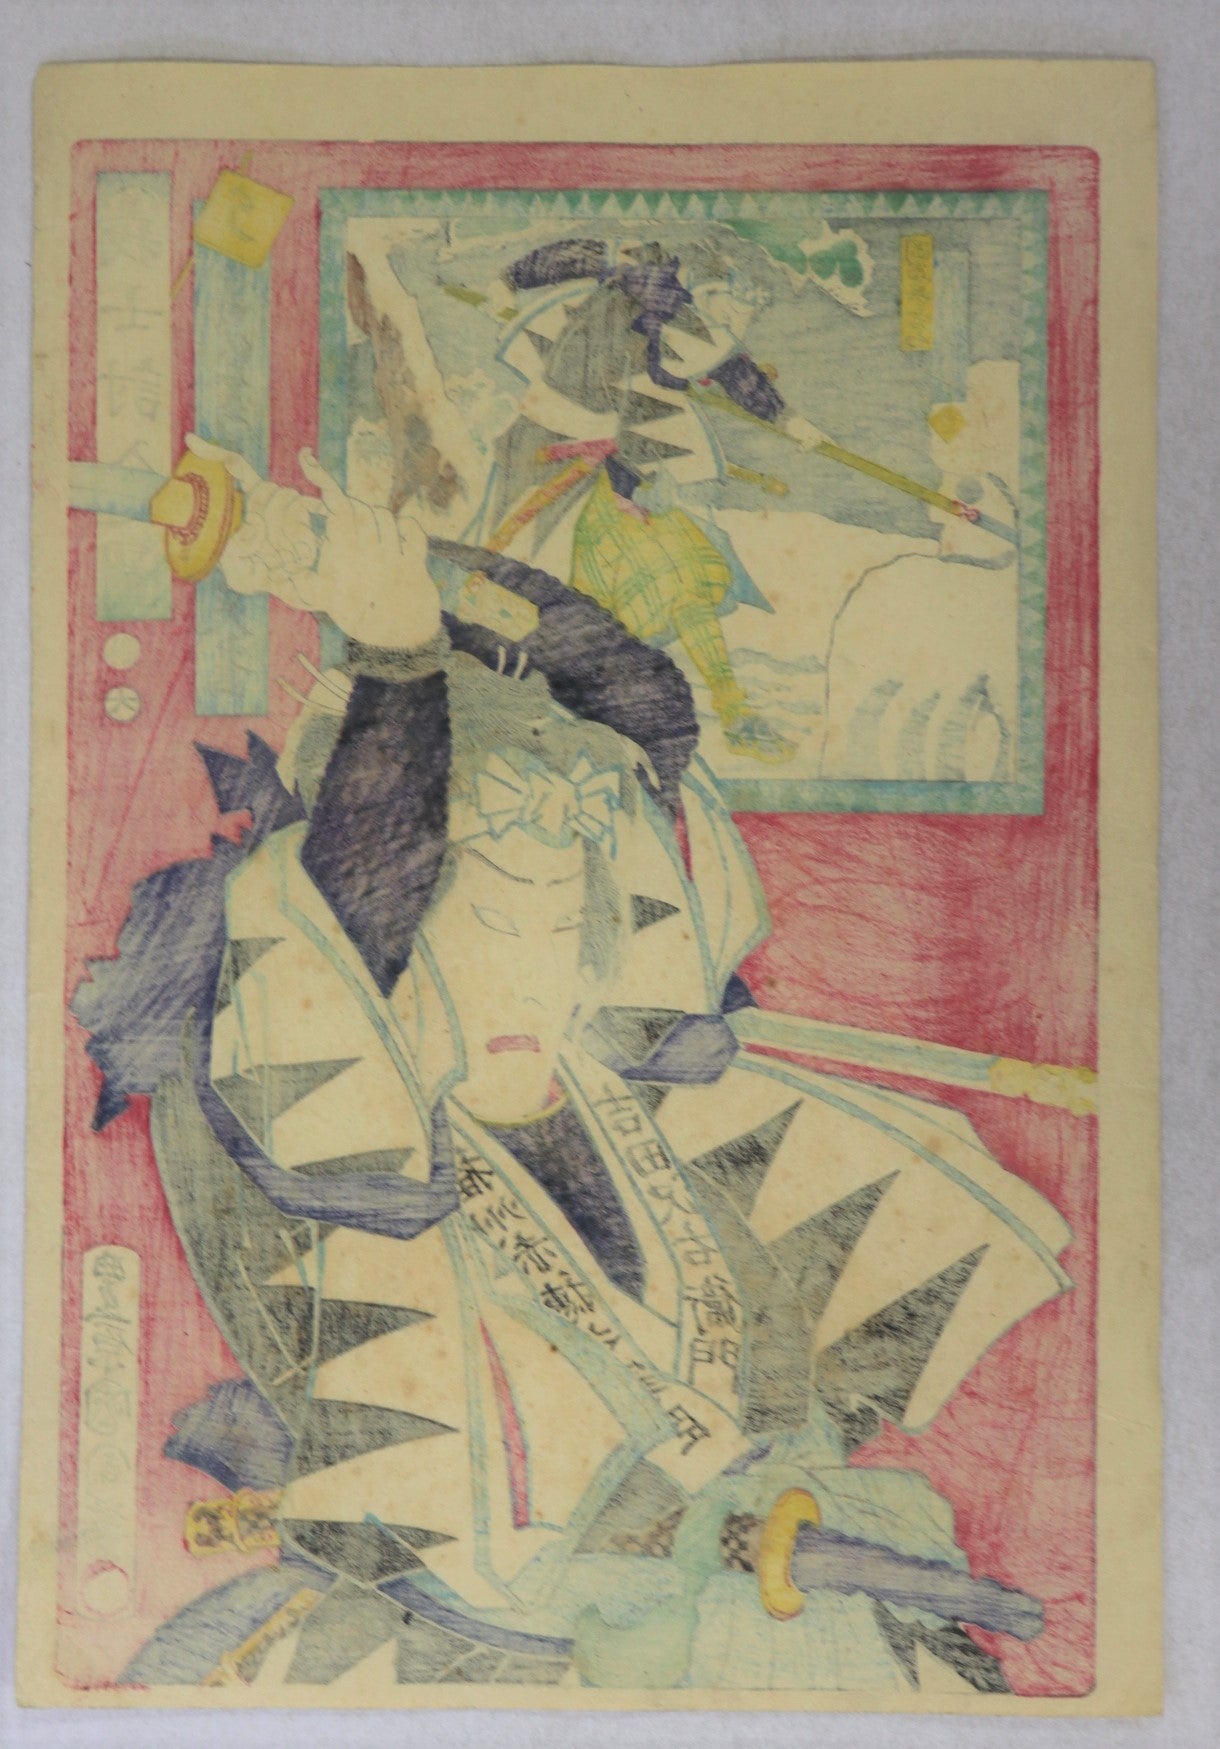 Nakamura Fujaku as Yoshida Kawaemon from the series "Illustration of faithful Samurais "by Kunichika / Nakamura Fujaku dans le rôle de Yoshida Kawaemon de la série "Illustration des loyaux Samourais " par Kunichika (1872)